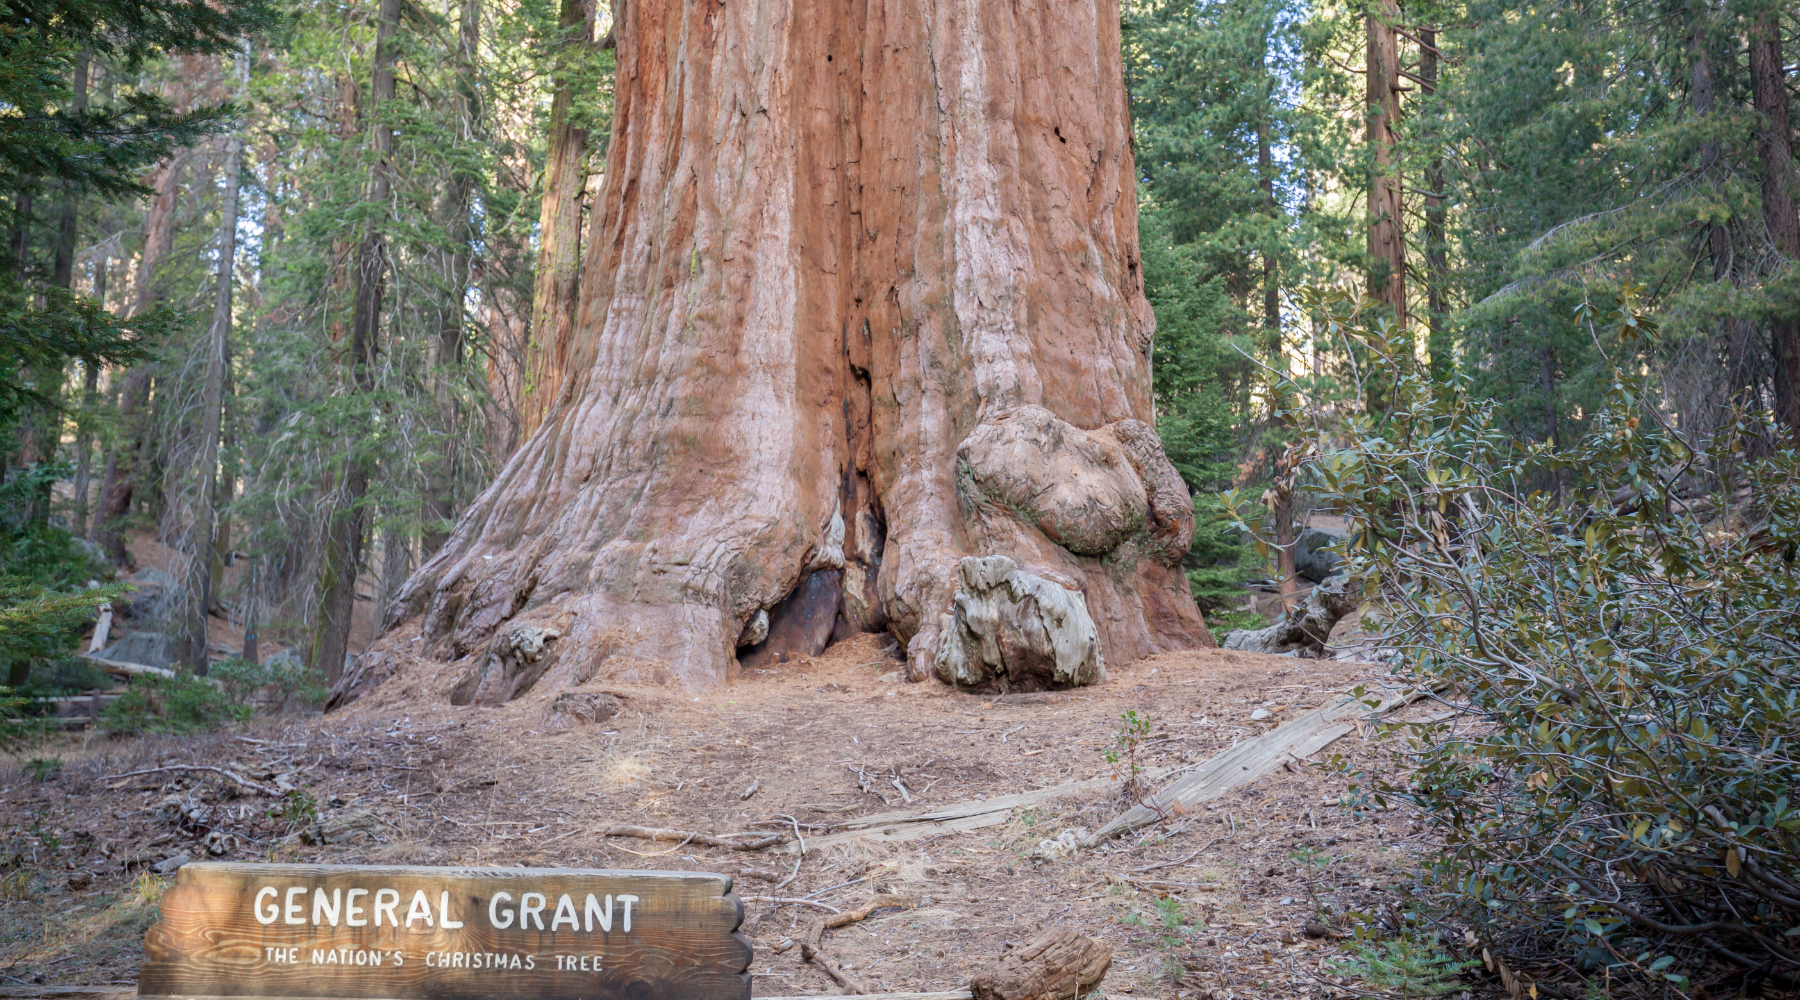 General Grant giant sequoia tree